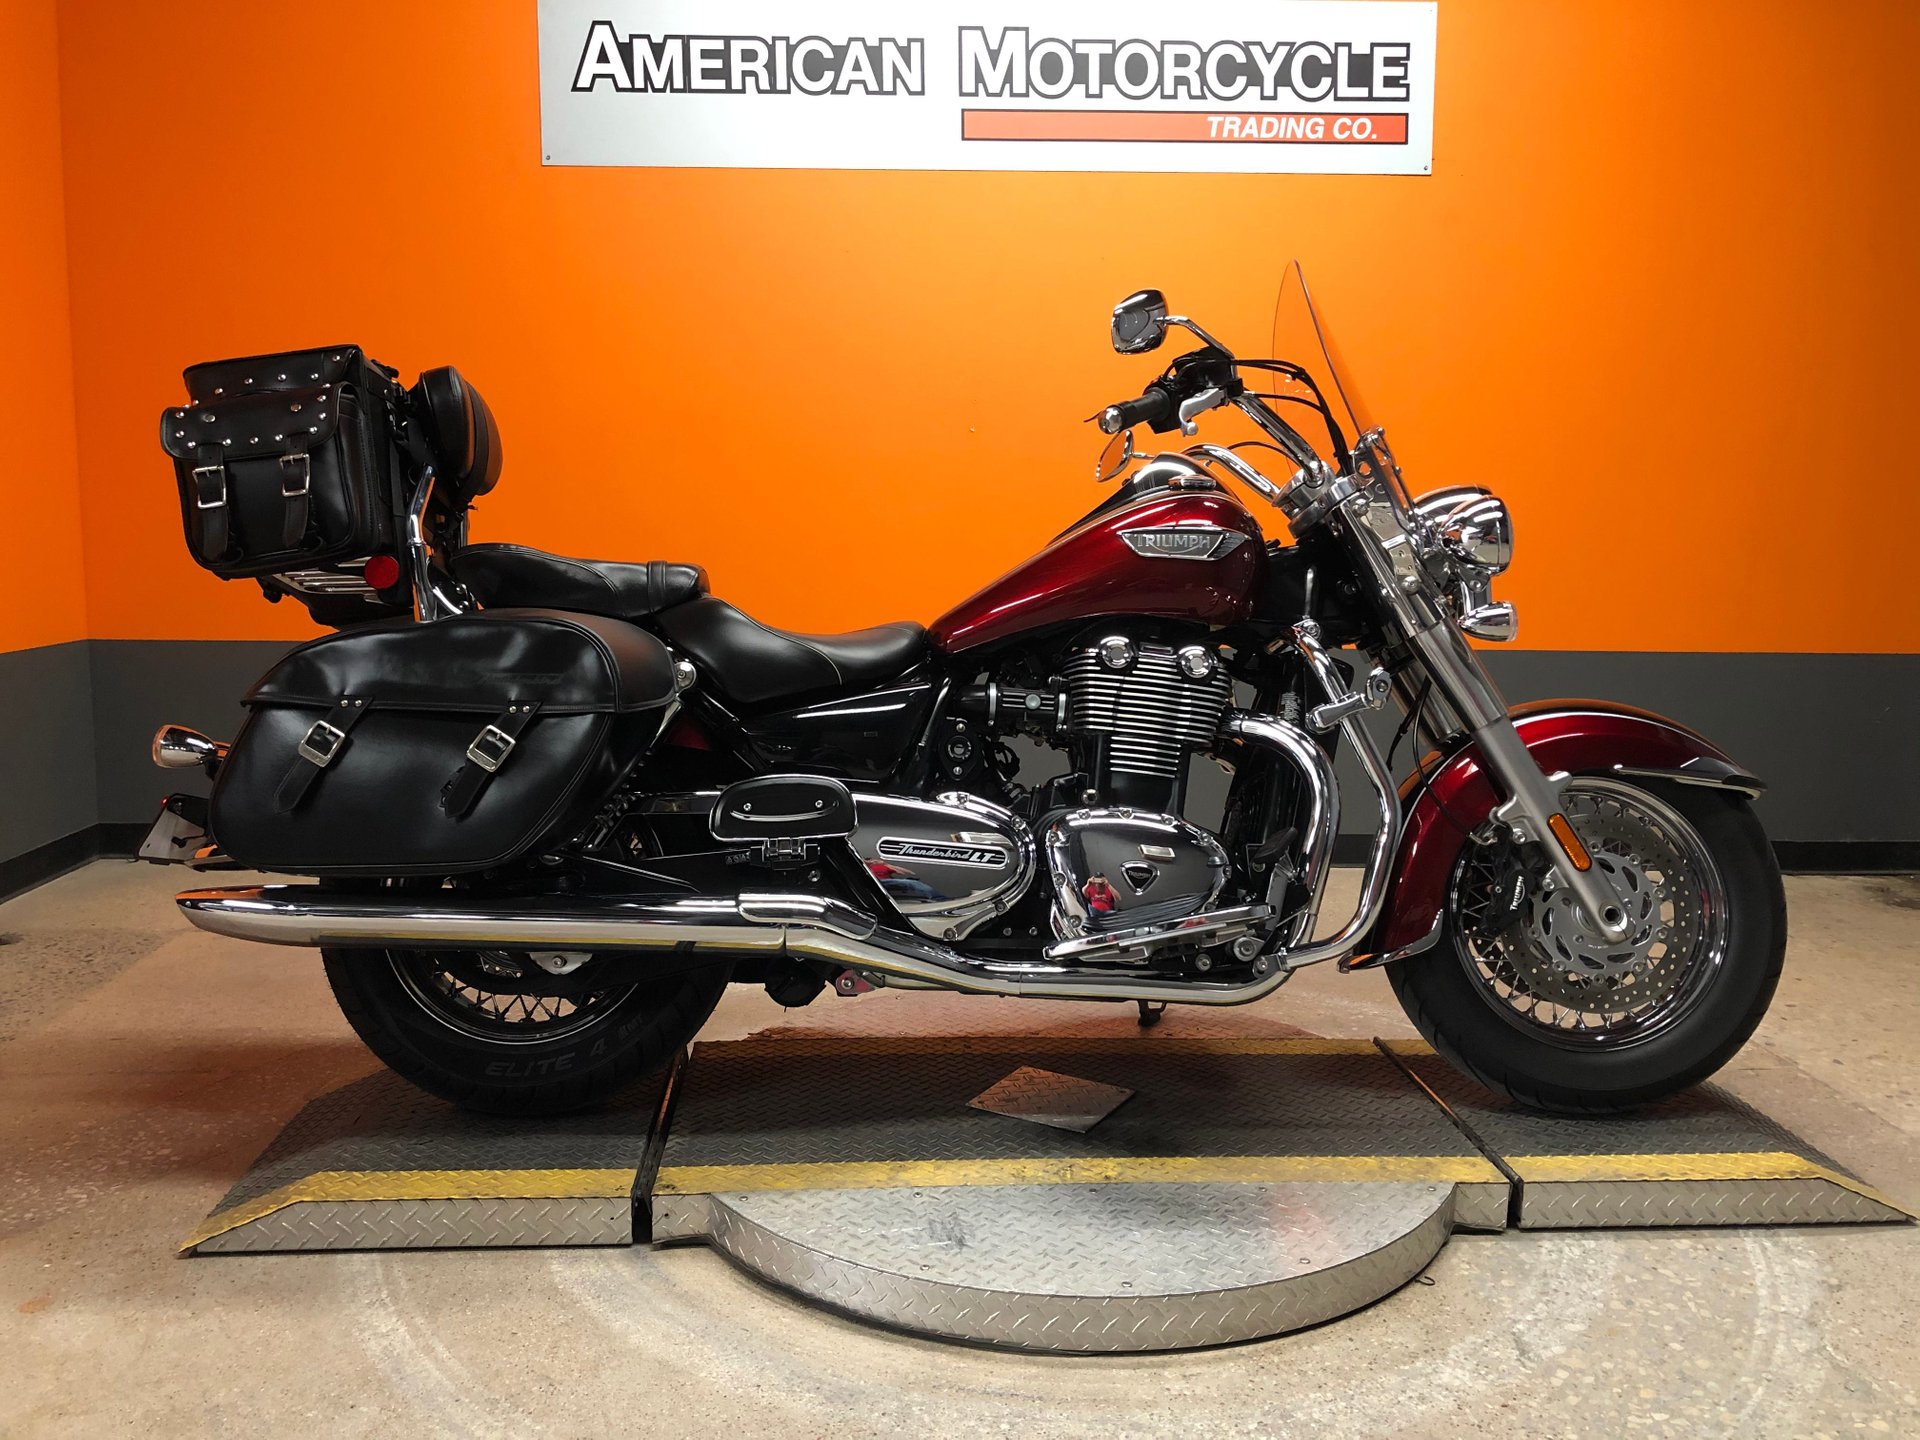 2015 Triumph Thunderbird | American Motorcycle Trading Company - Used  Harley Davidson Motorcycles